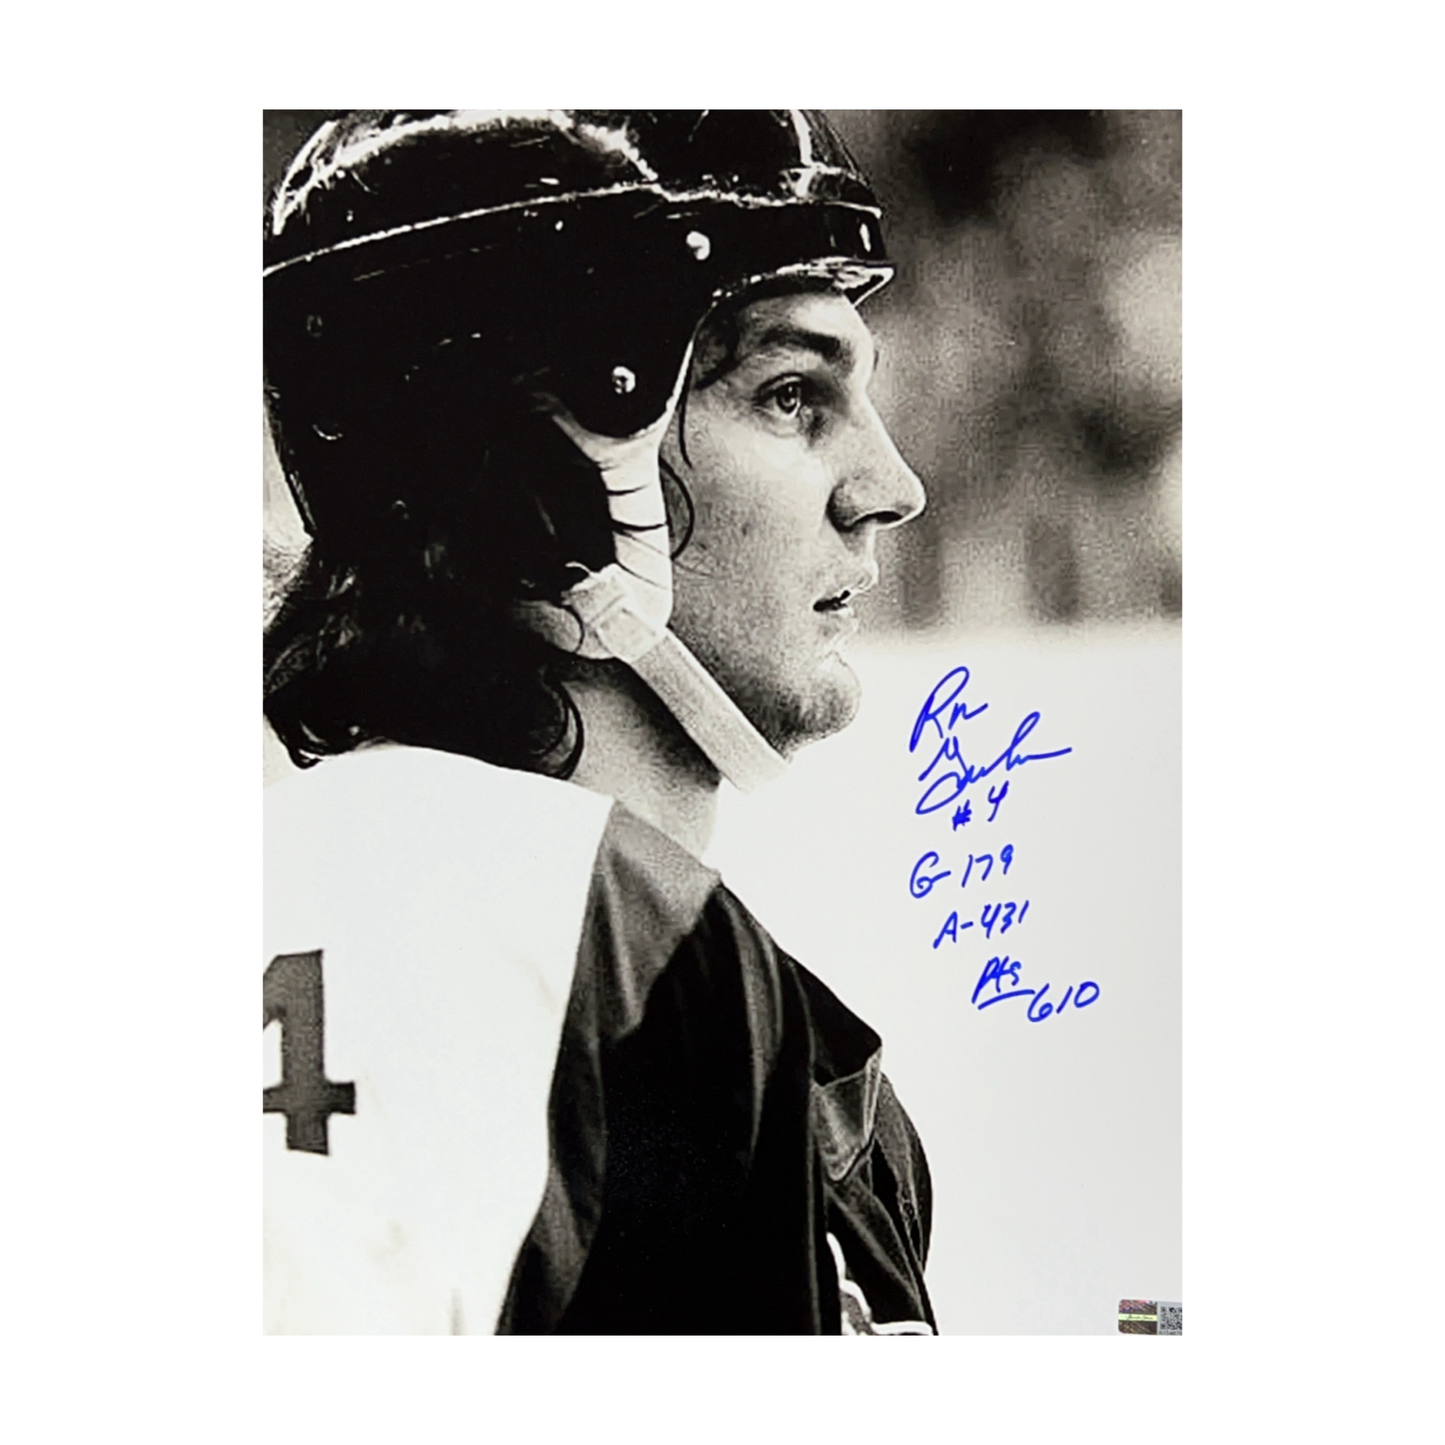 Ron Greschner Autographed New York Rangers B&W Close Up 11x14 “G-179, A-431, Pts-610” Inscriptions Steiner CX